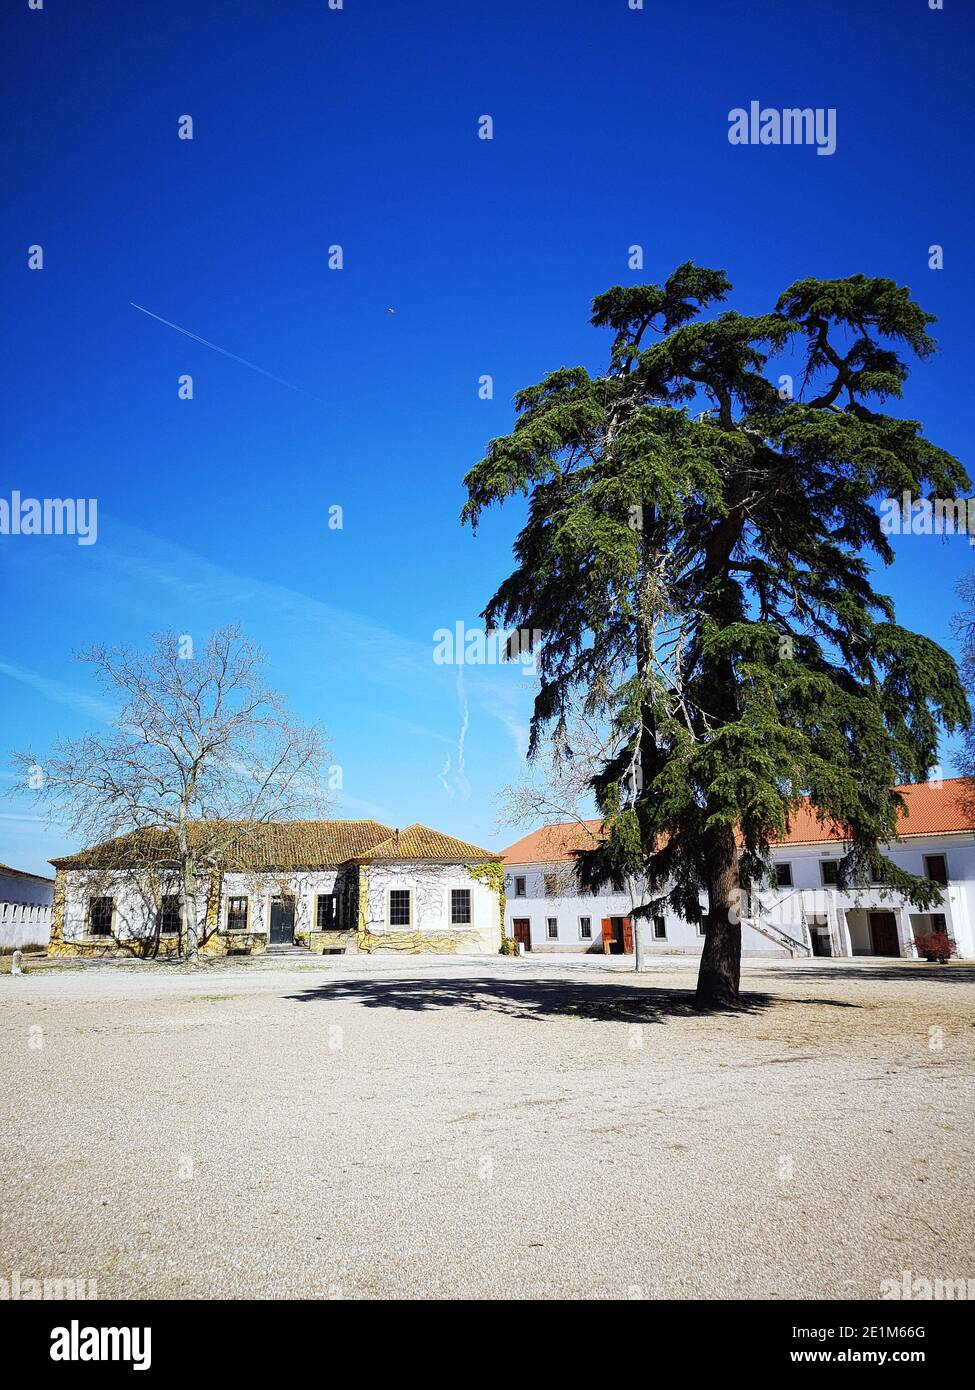 Portugal / Azinhaga /The beautiful estate “Quinta da Broa” isthe birthplace of the Veiga horses, one of the four main lineages of the Lusitano breed. Stock Photo